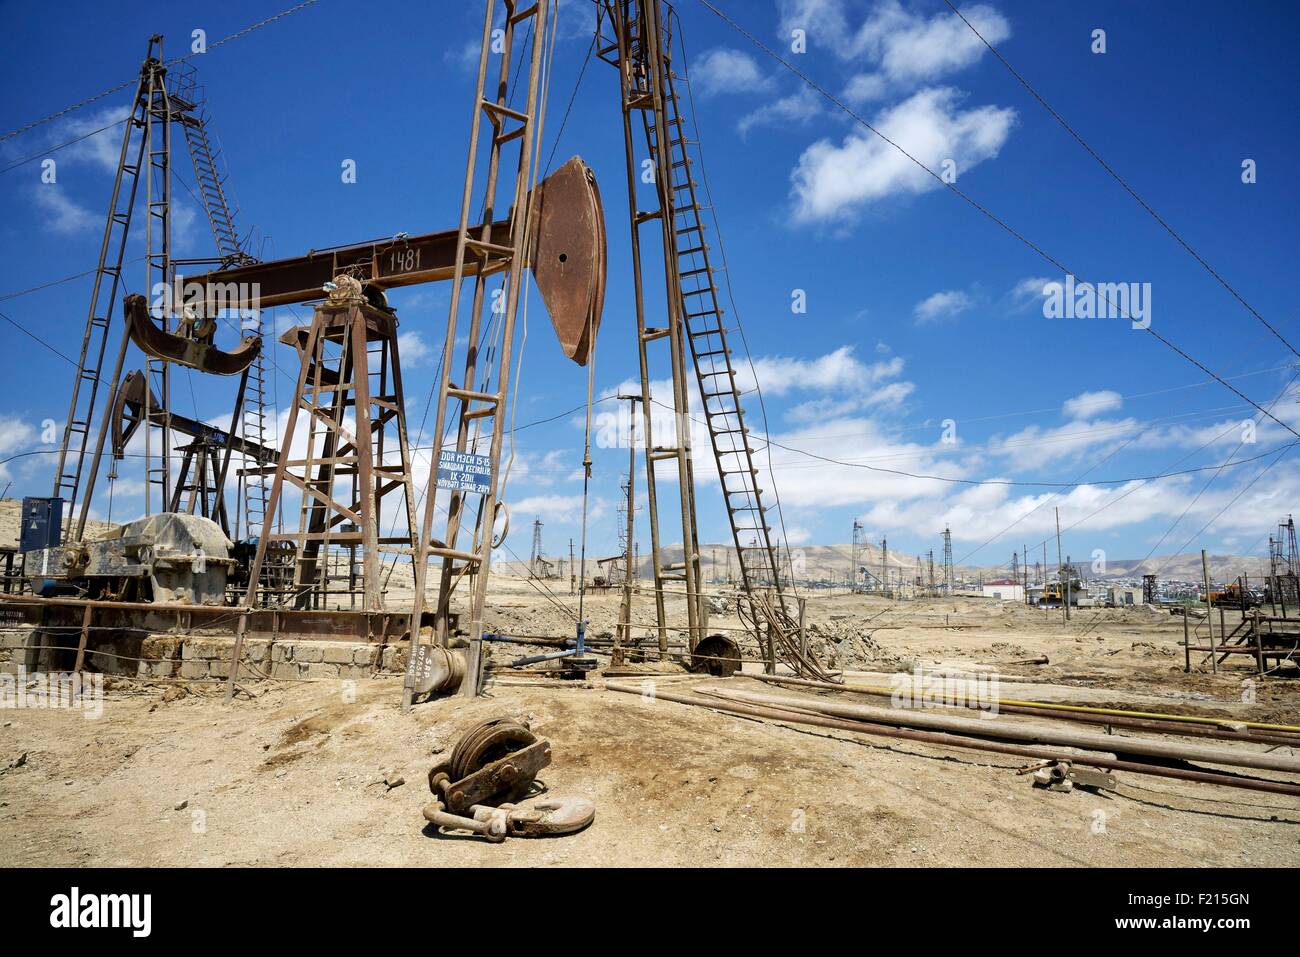 Azerbaijan, Baku, Bibi Heybat, nodding donkey oil pumps pumping oil up from the an oil field Stock Photo